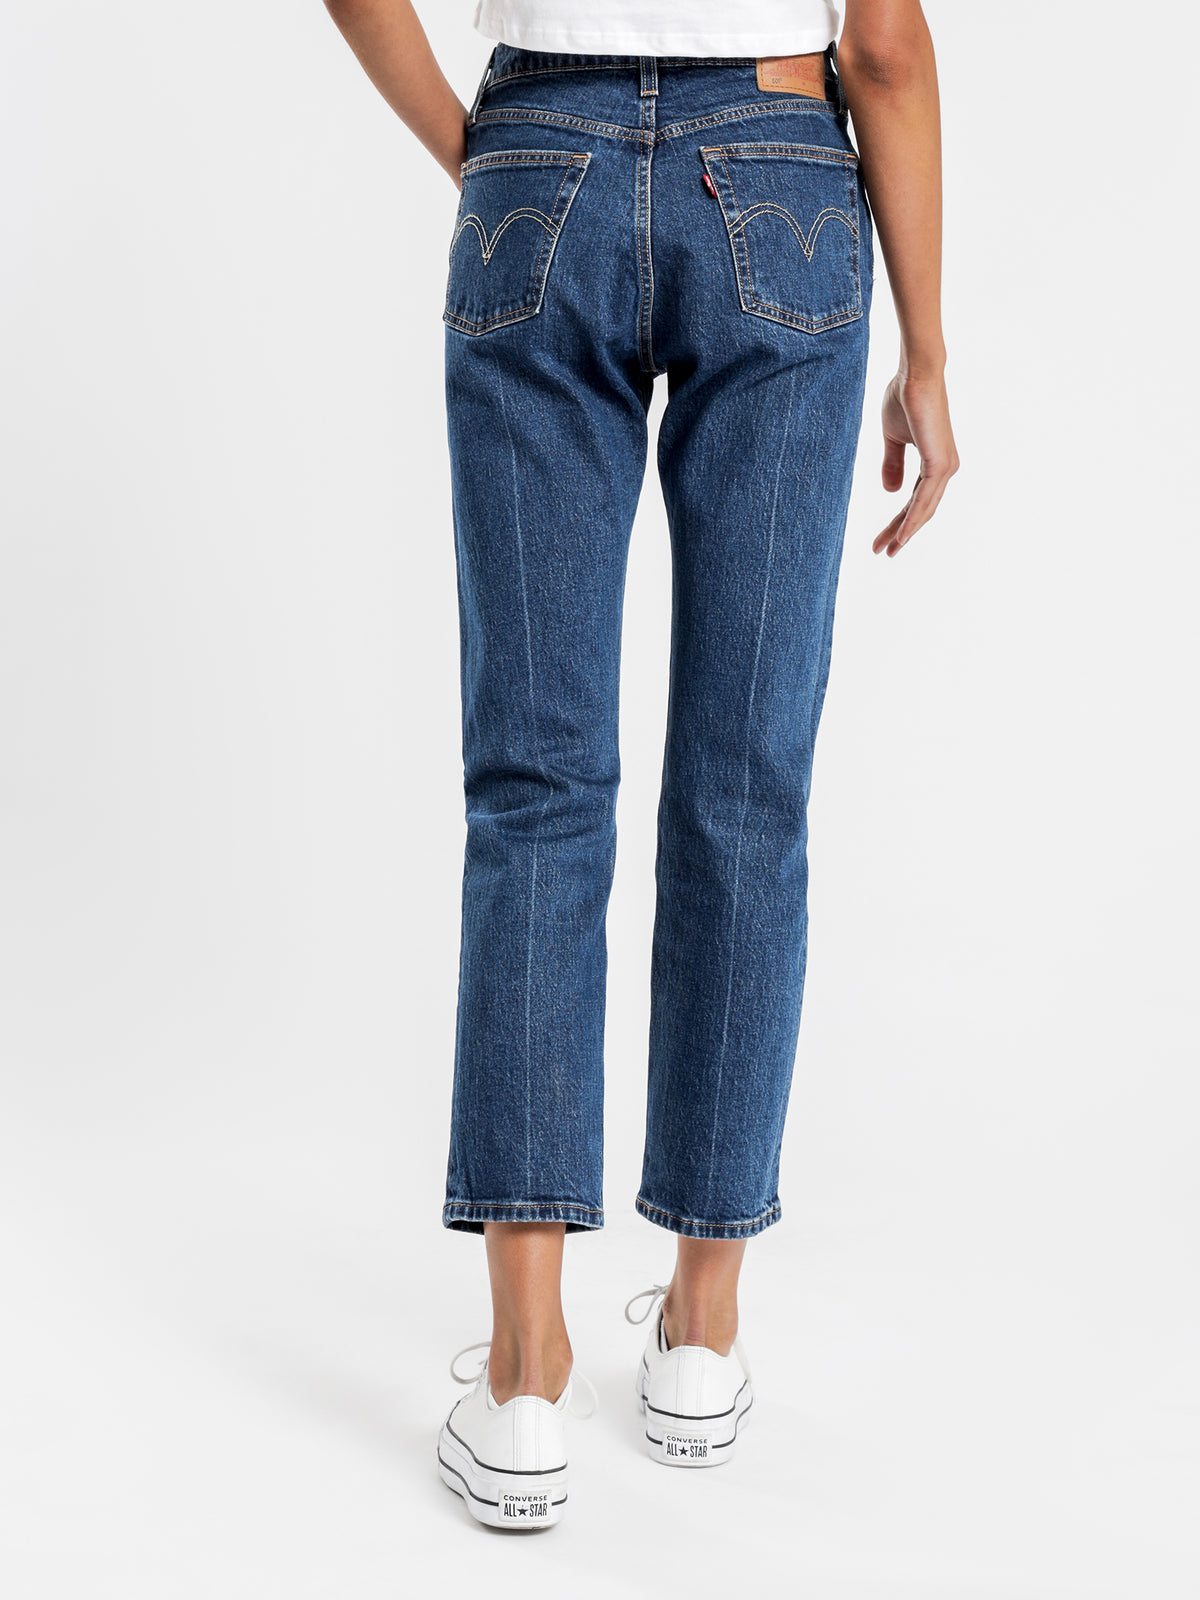 501 Original Cropped Jeans in Charleston Pressed Blue Denim